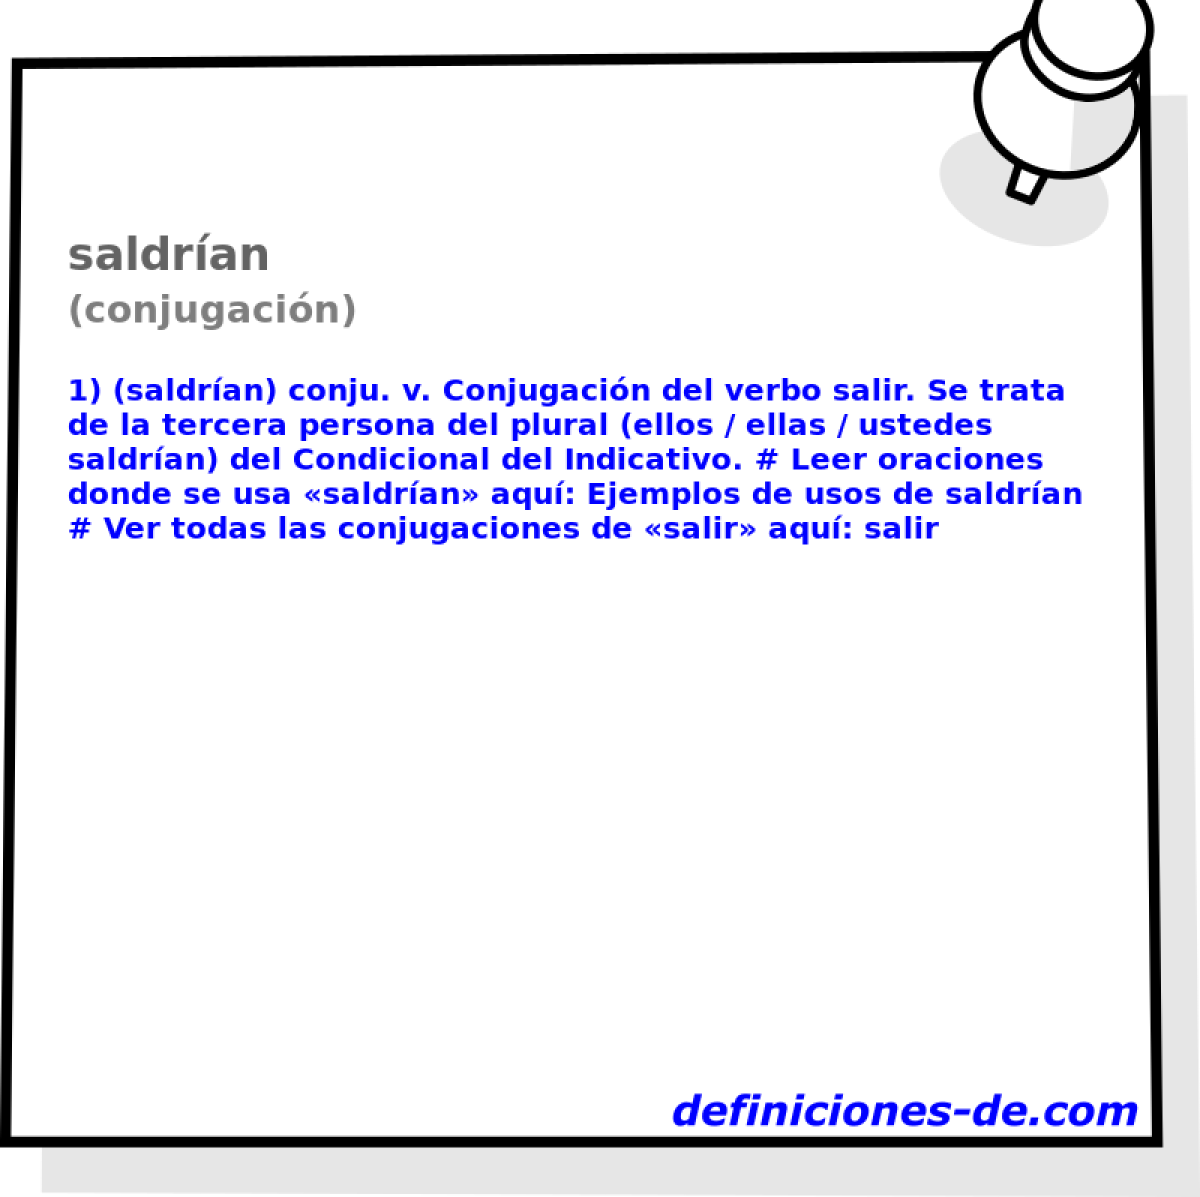 saldran (conjugacin)